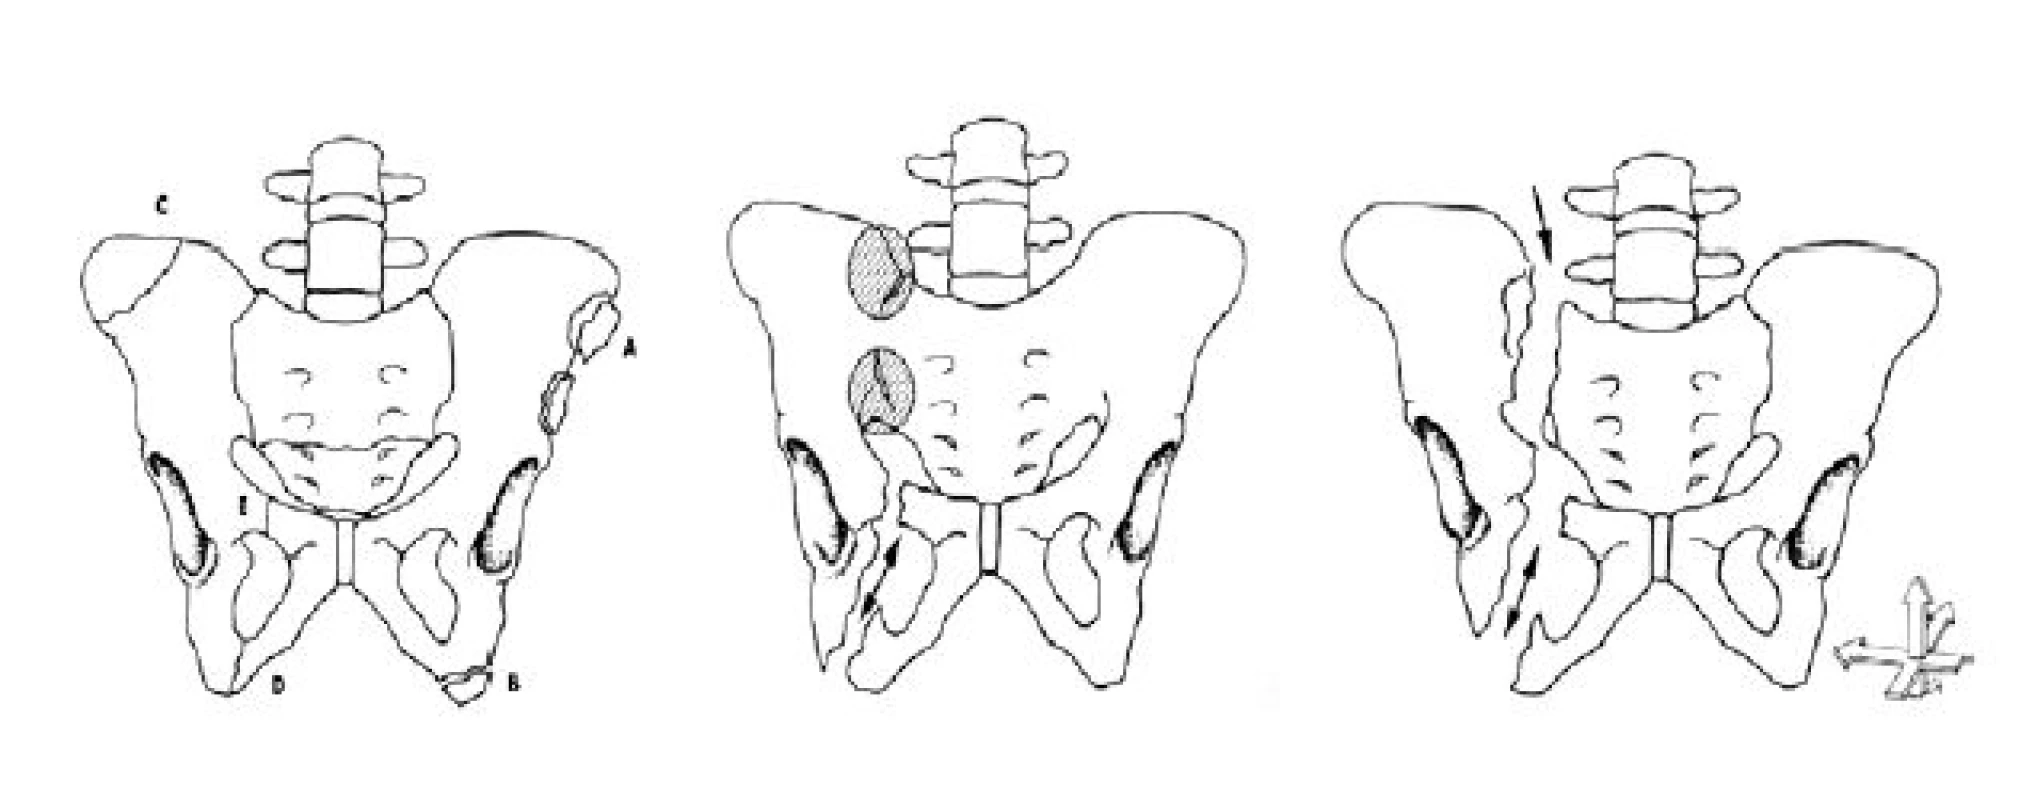 Fraktury pánve: dělení dle AO – typ A, B a C
Fig. 1. Pelvic fractures: division by AO – type A, B, C